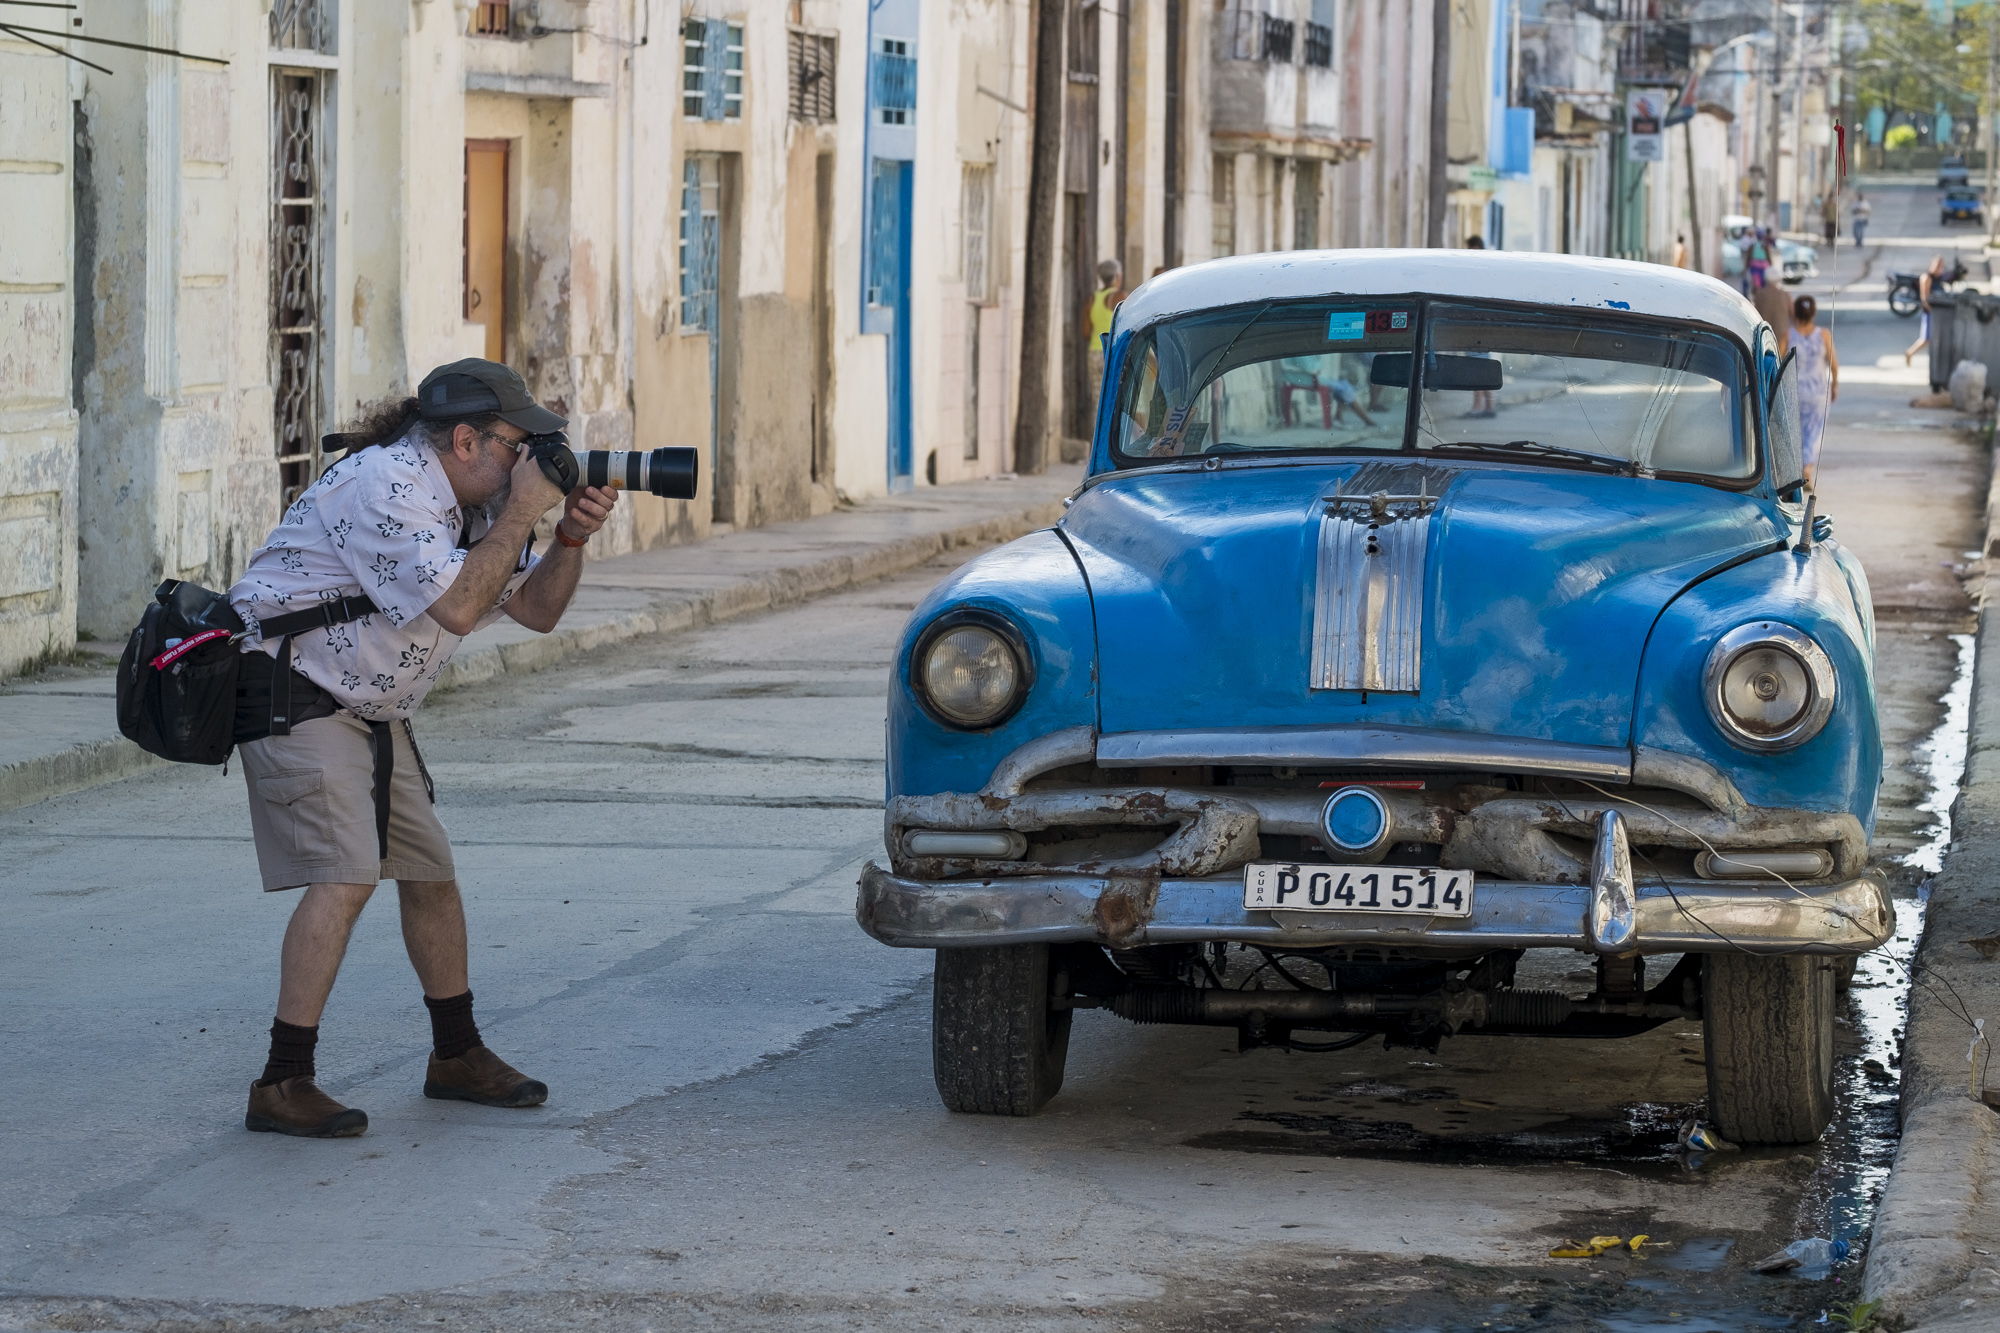 John Greengo Photography - tour participant shooting in Cuba